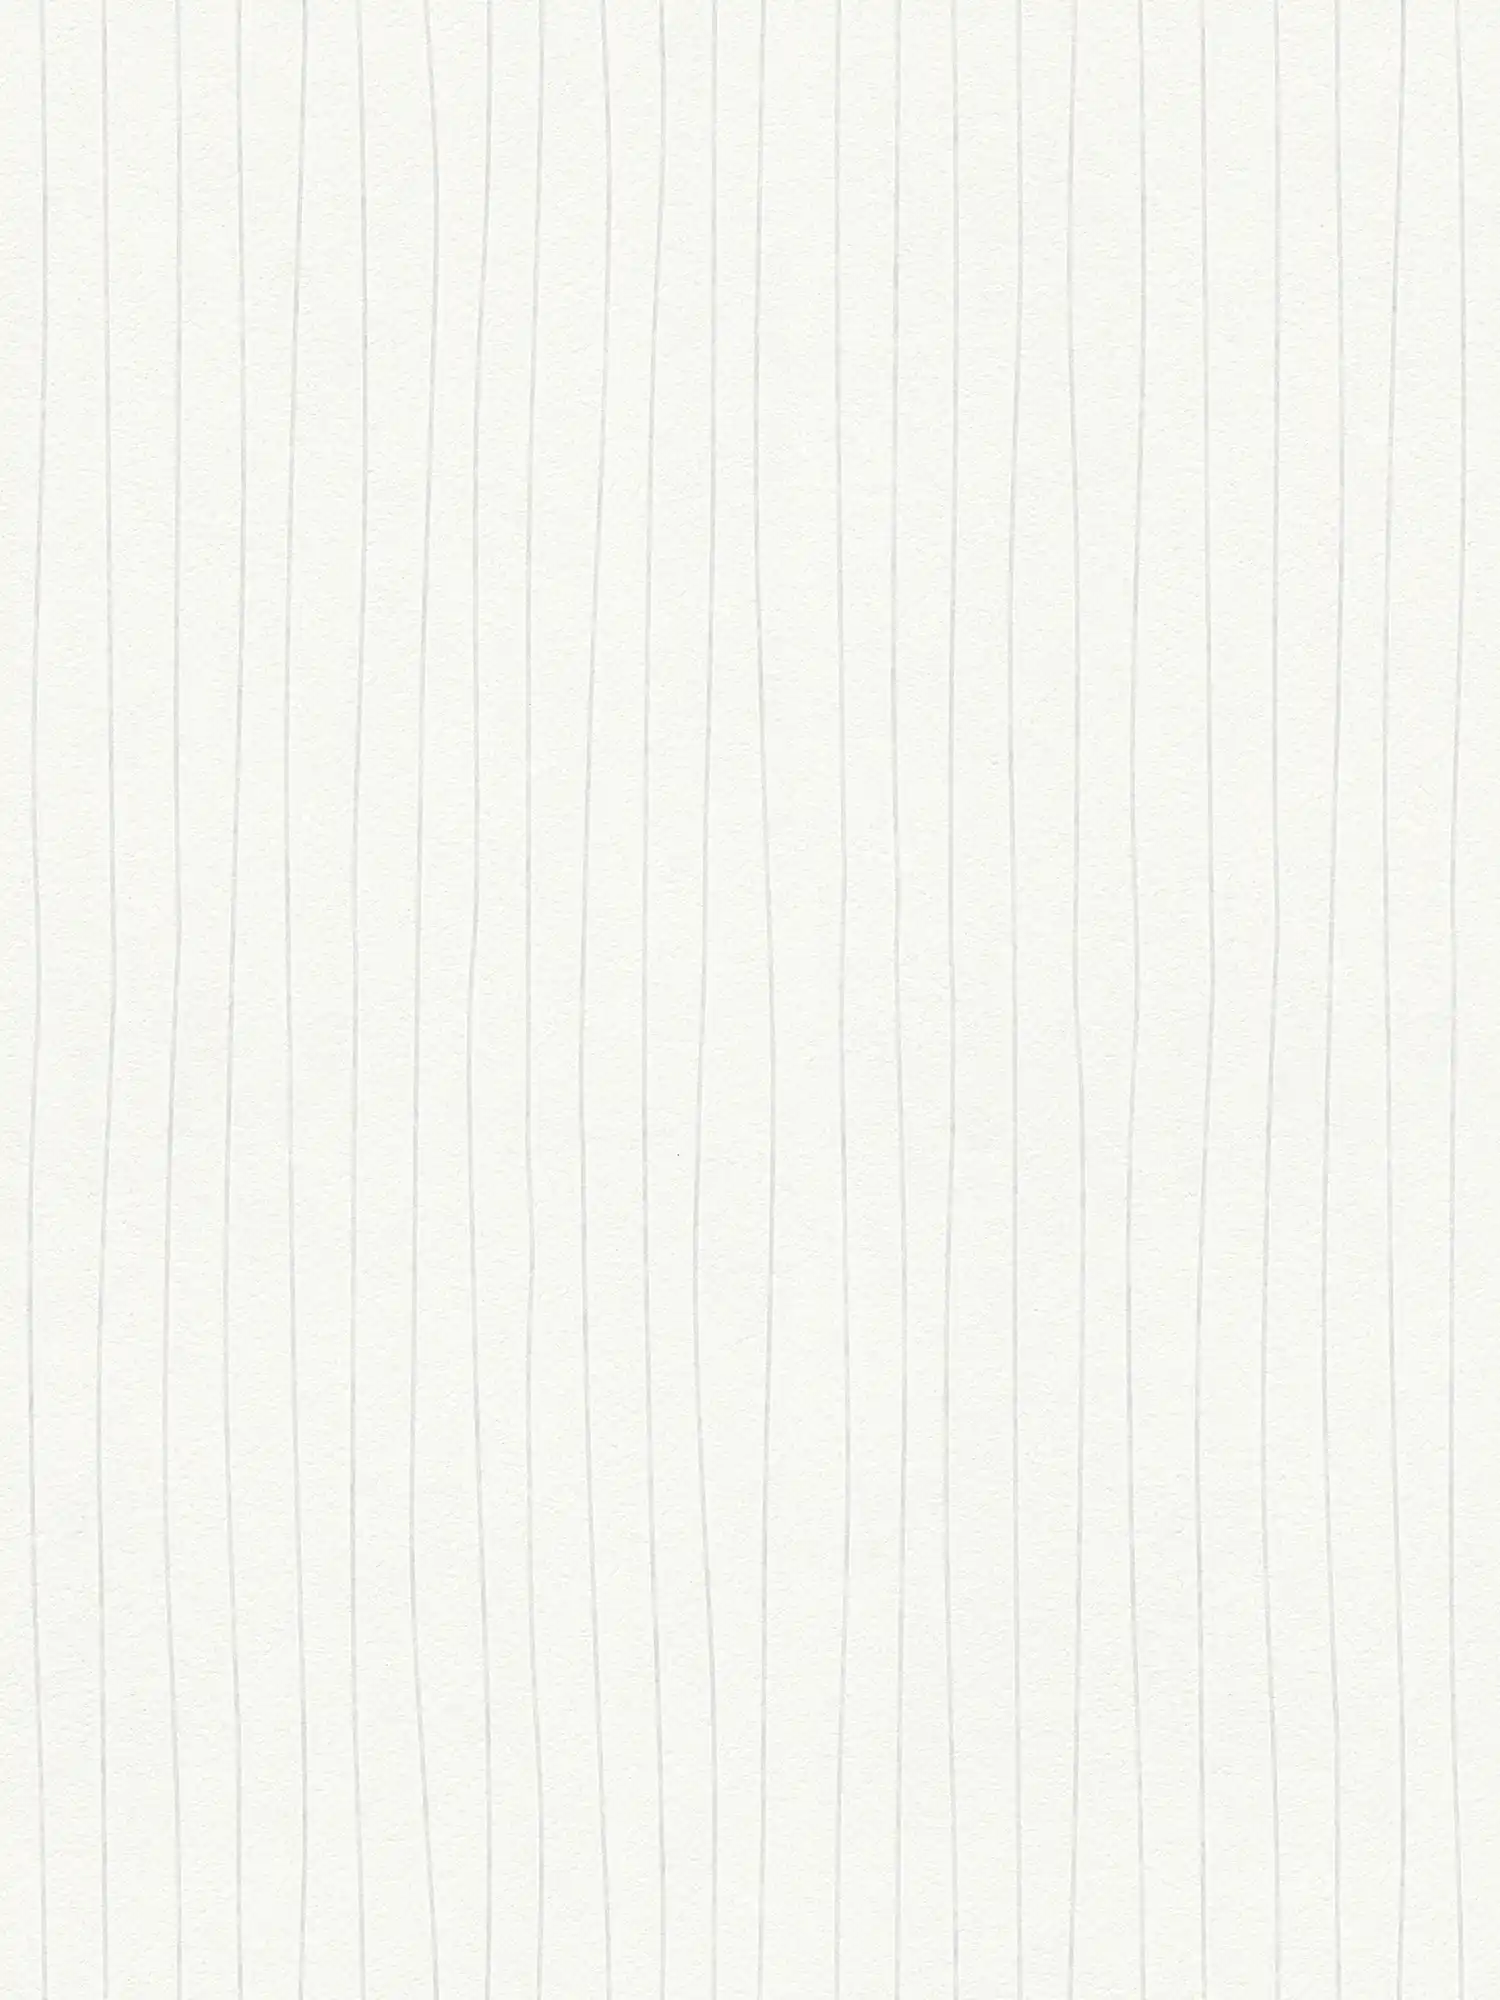 Carta da parati verniciabile con design a linee verticali - Bianco
